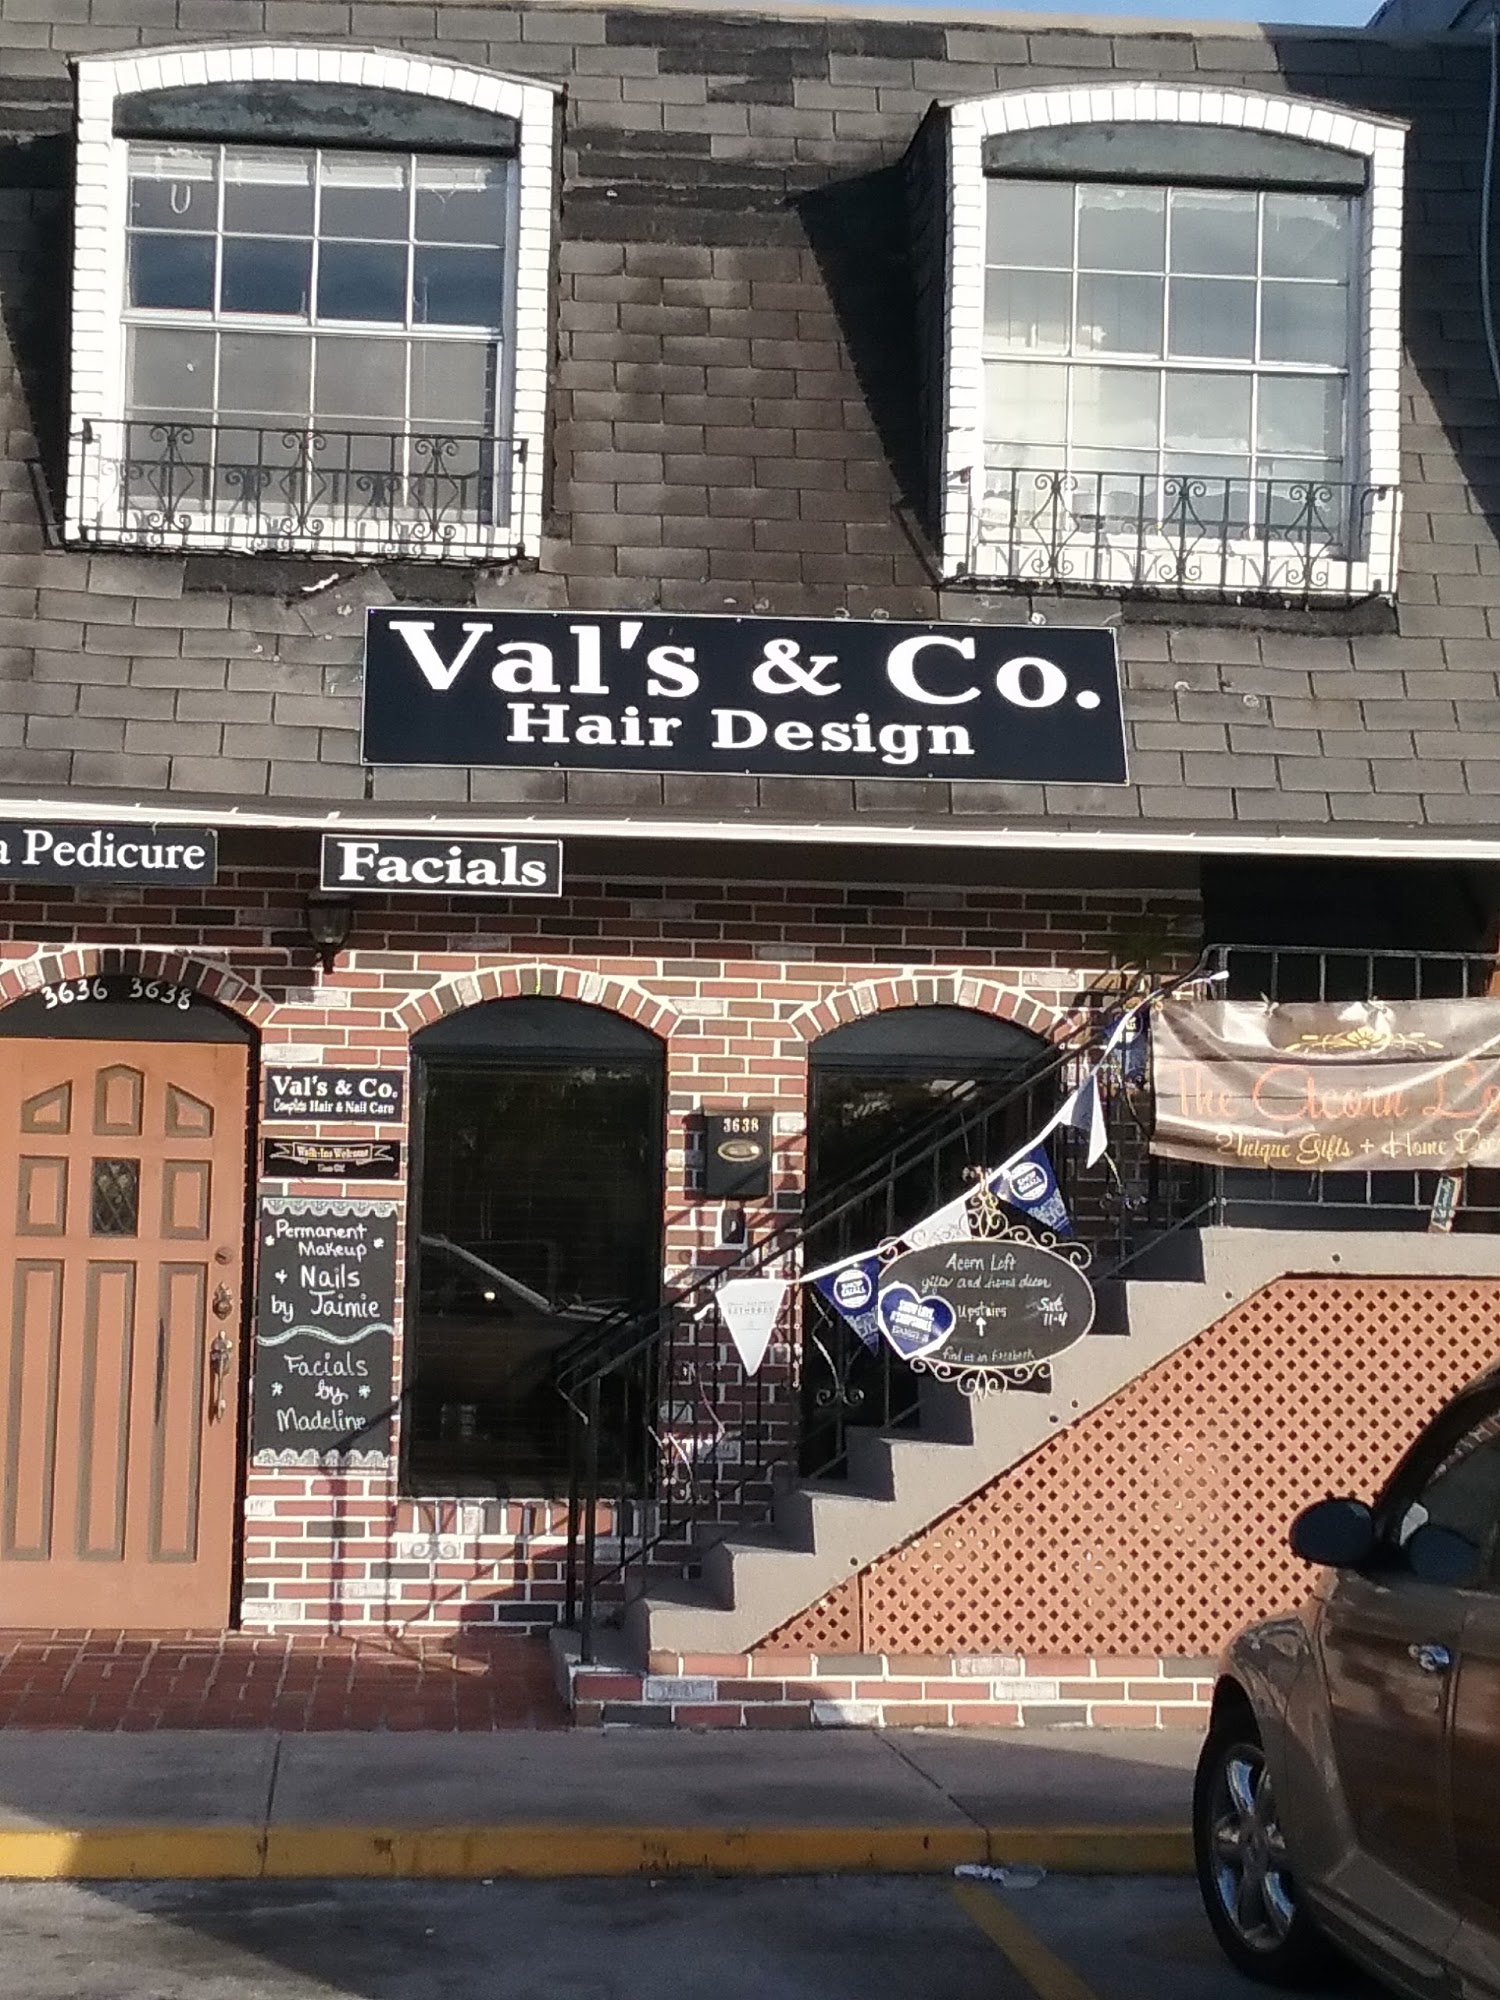 Val's & Co. Hair Design